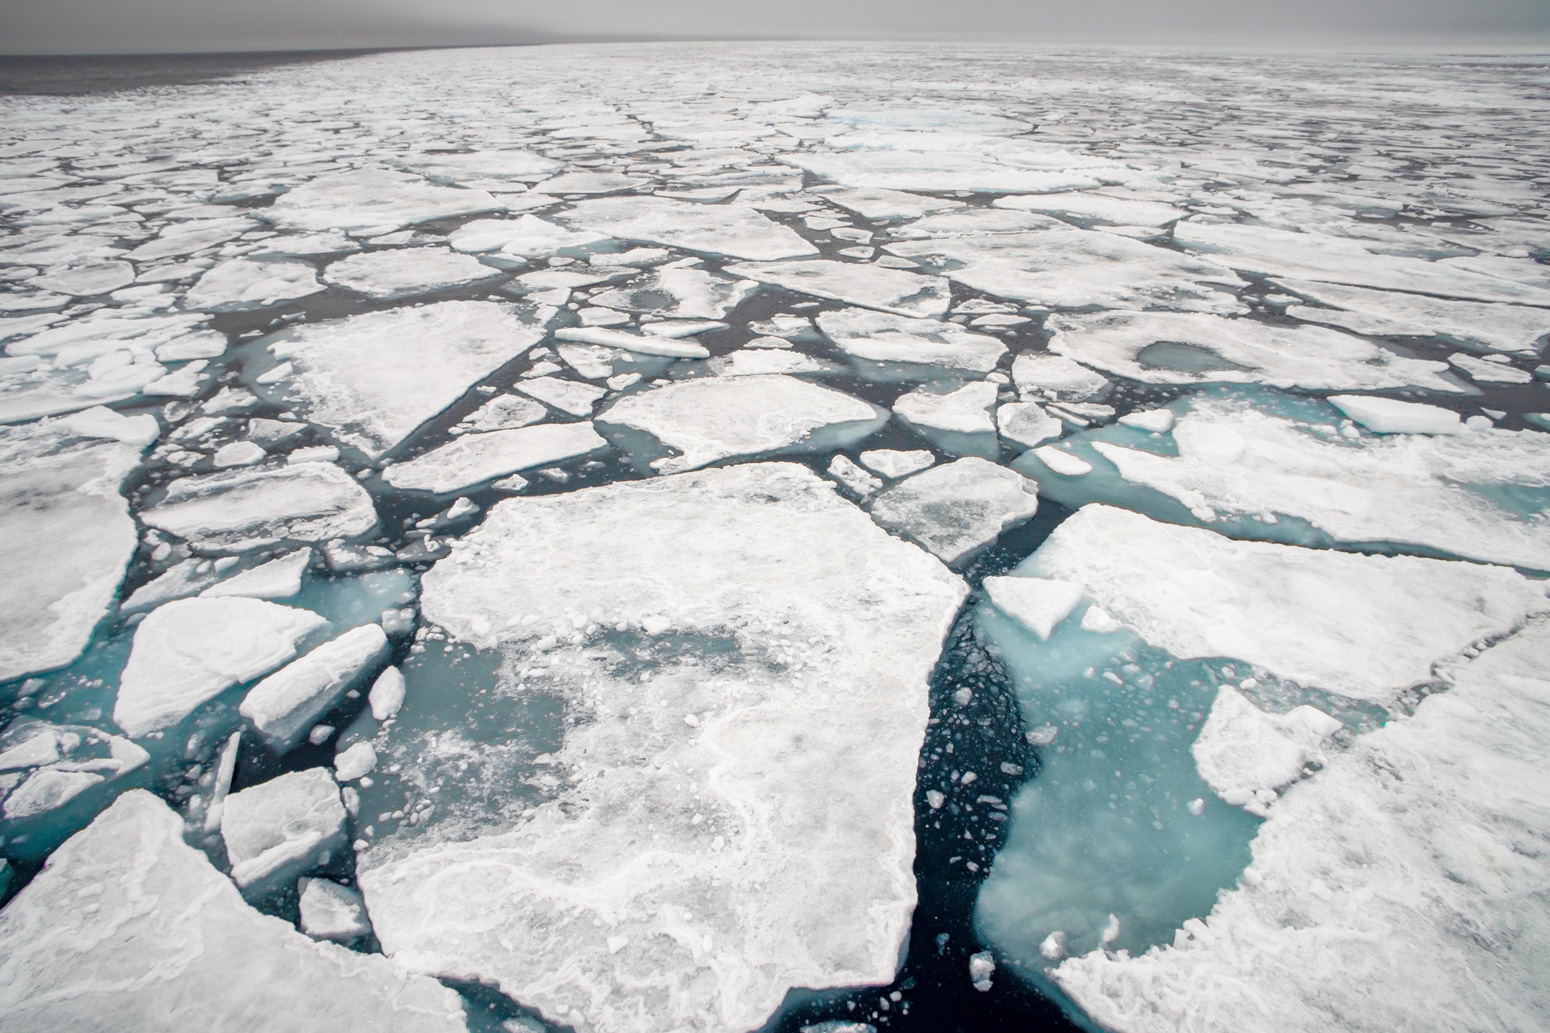 https://www.carbonbrief.org/wp-content/uploads/2021/09/Arctic-sea-ice-floe-in-Svalbard_RMKYMA.jpg